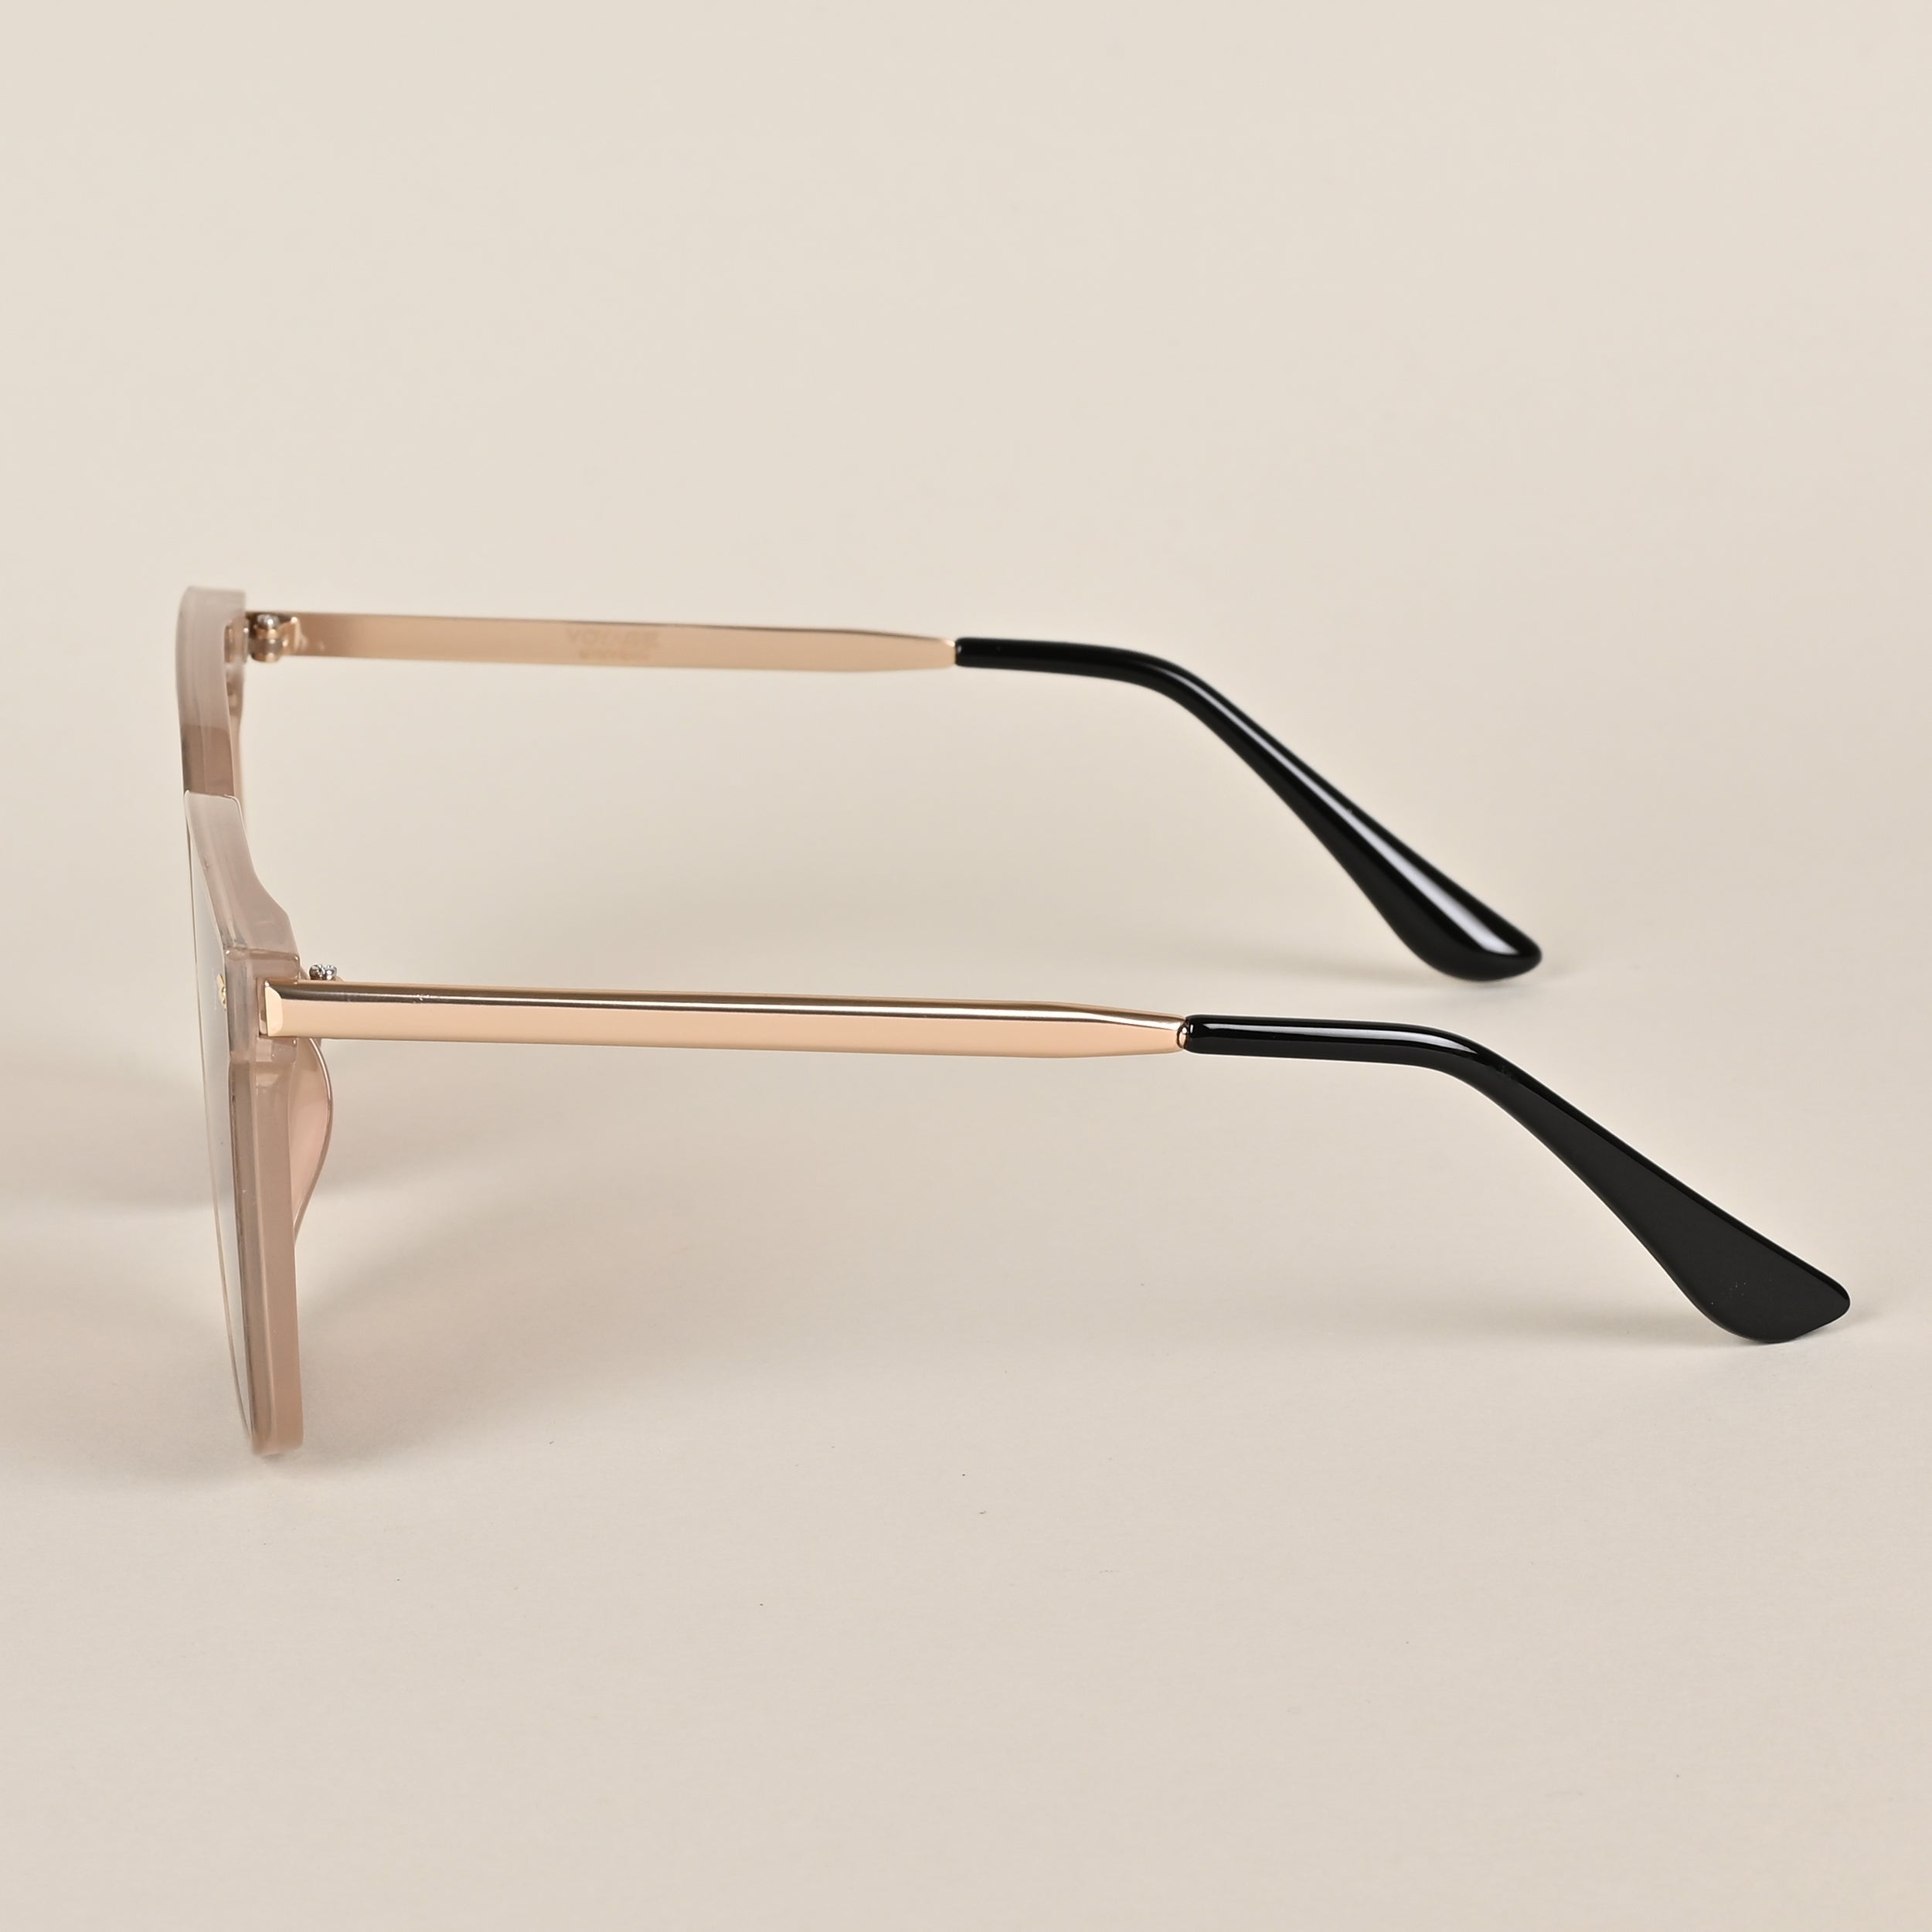 Voyage Brown Designed Wayfarer Sunglasses (631MG3882)